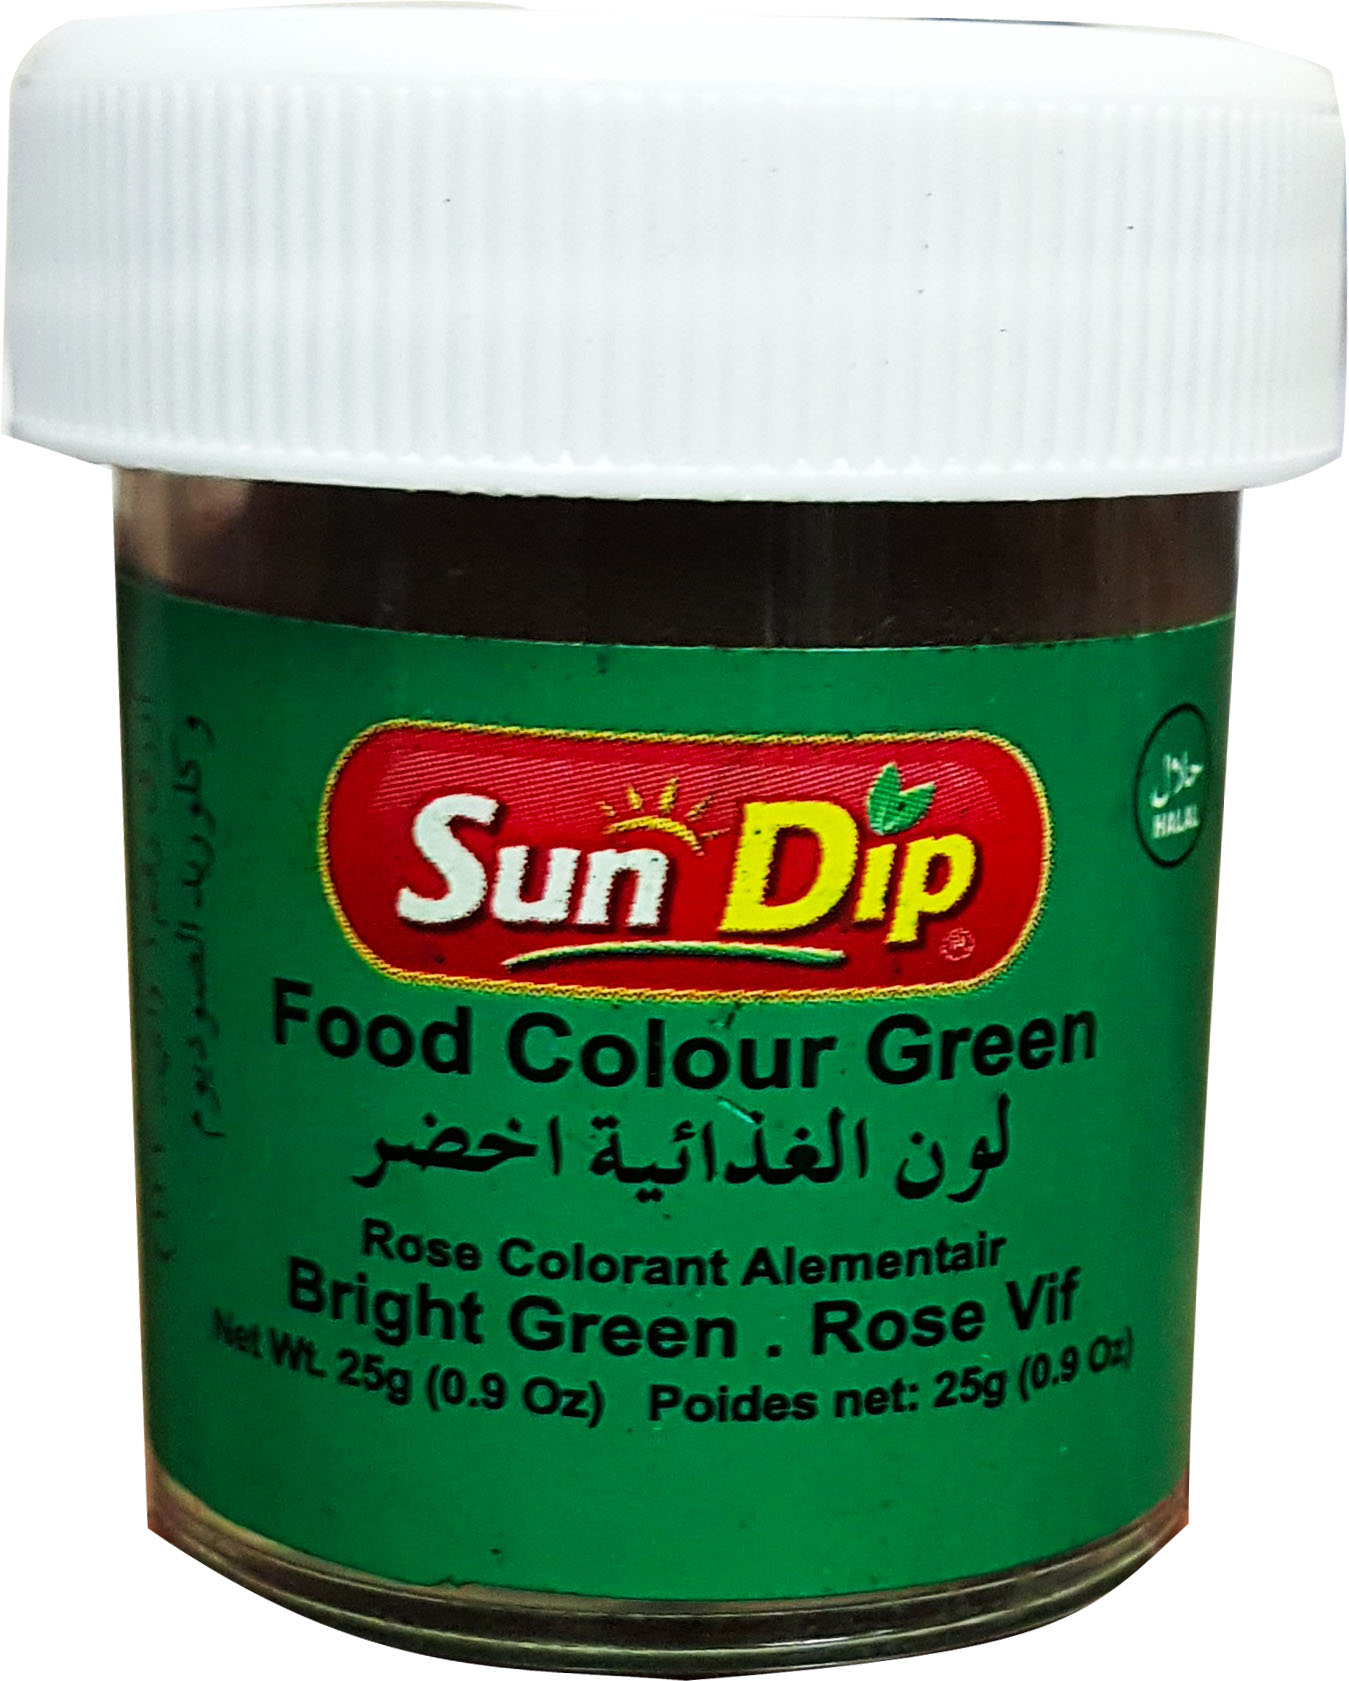 Sundip Food Colour Green - Click Image to Close